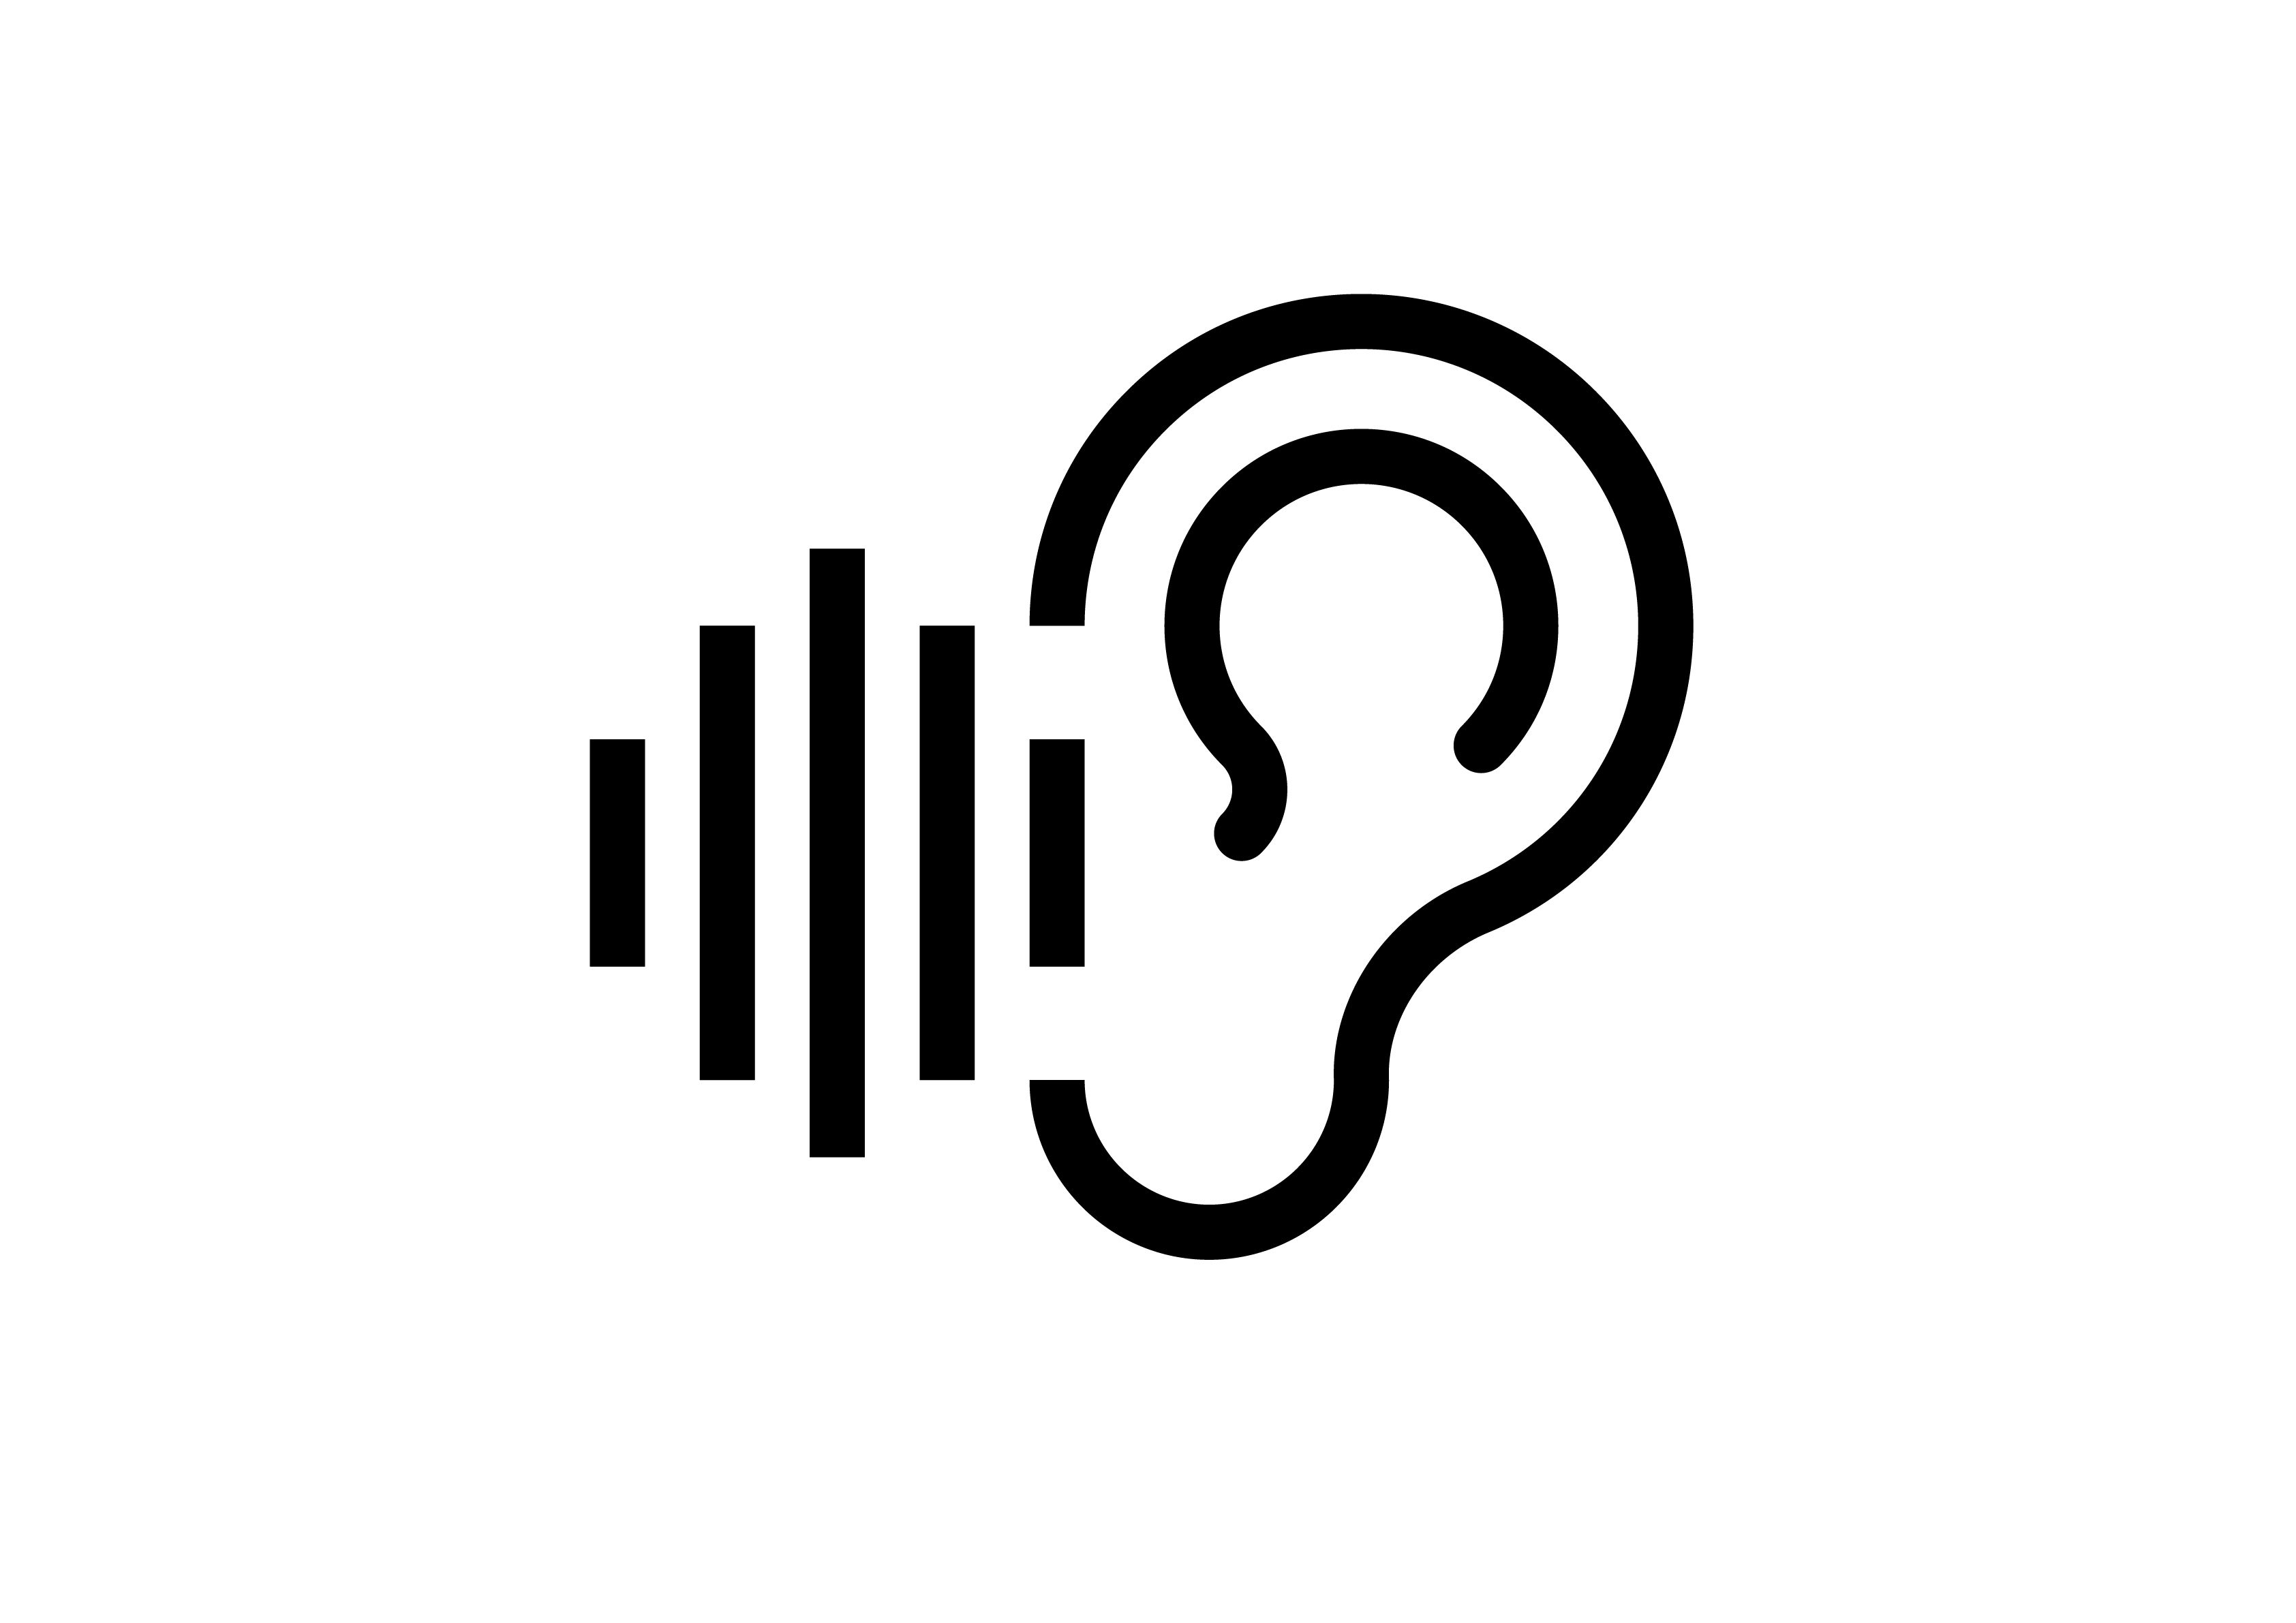 Ear Hearing Logo Graphic by Nur design · Creative Fabrica